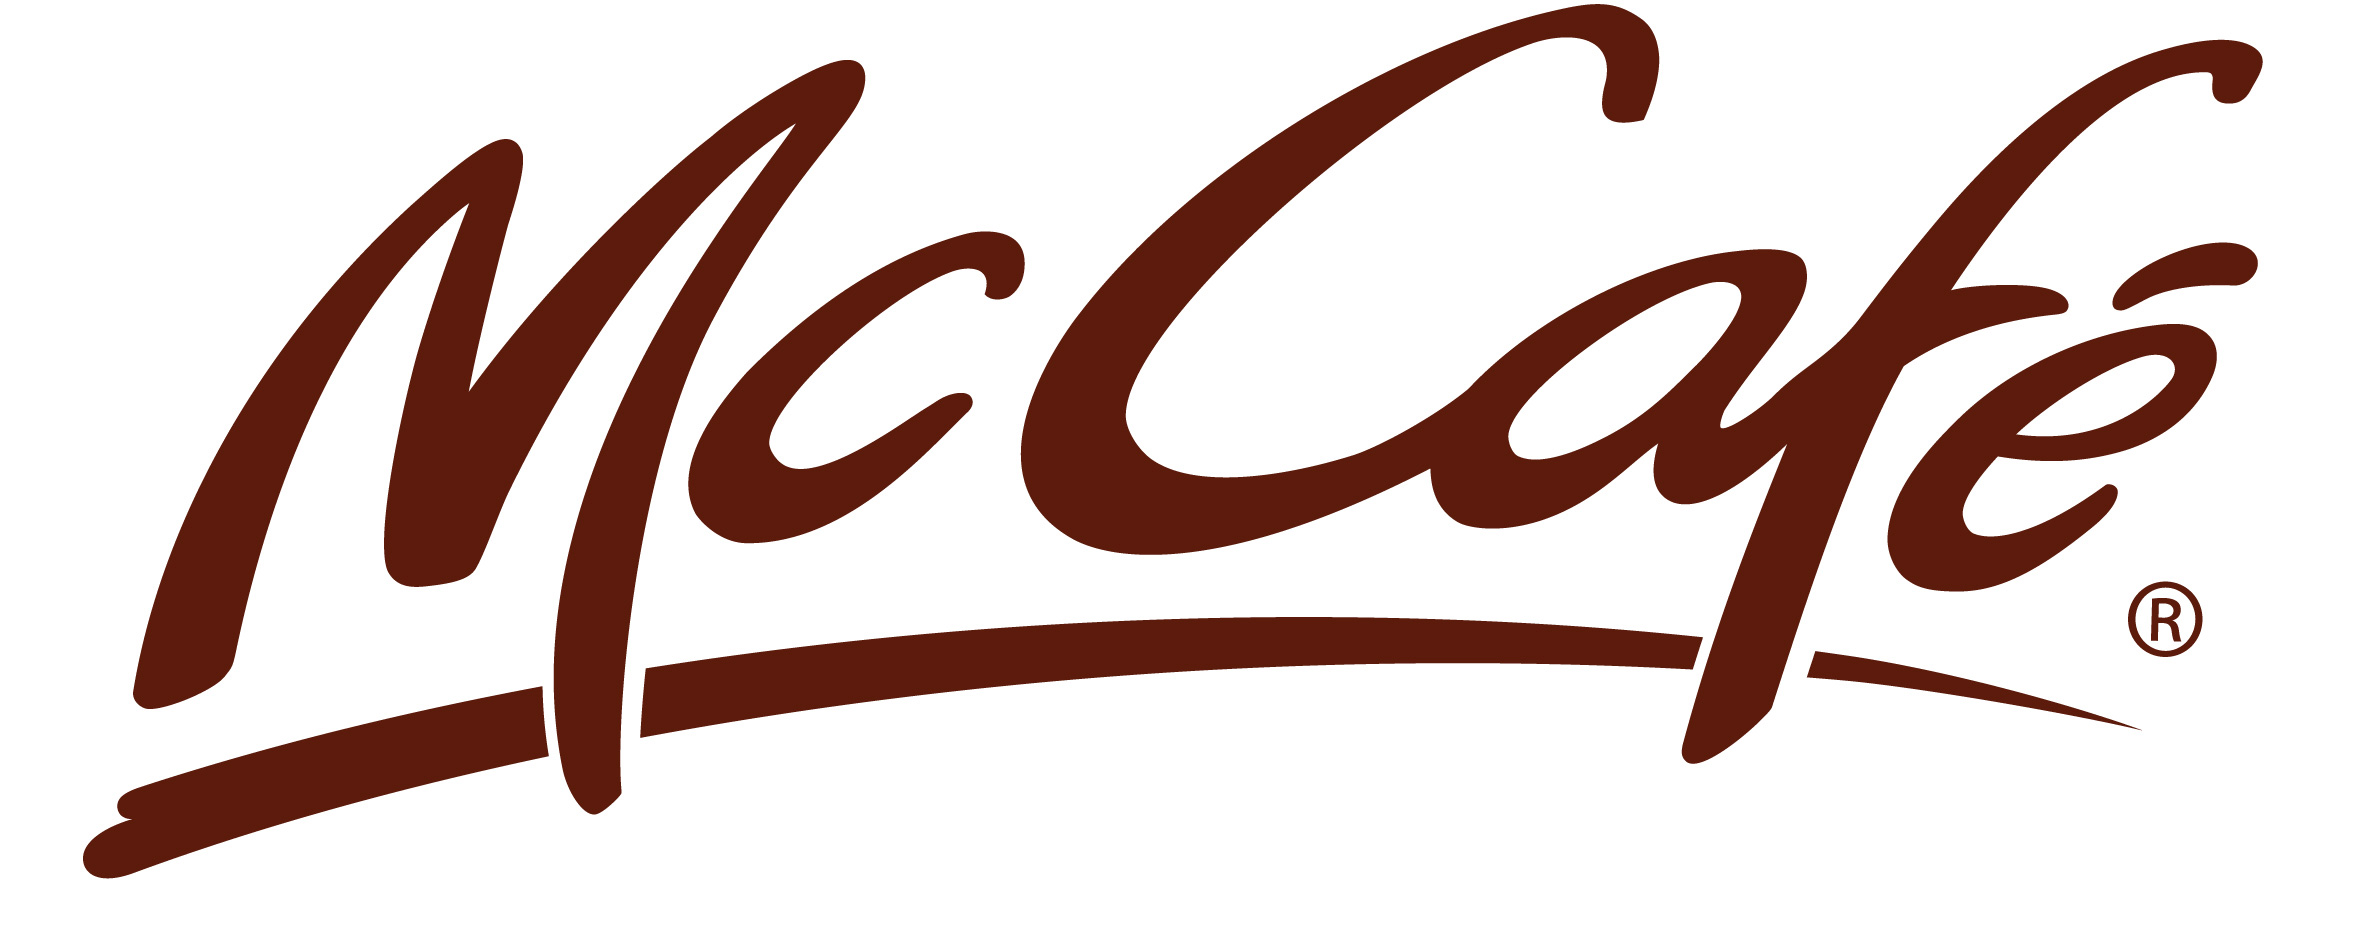 mccafe-logo.jpg